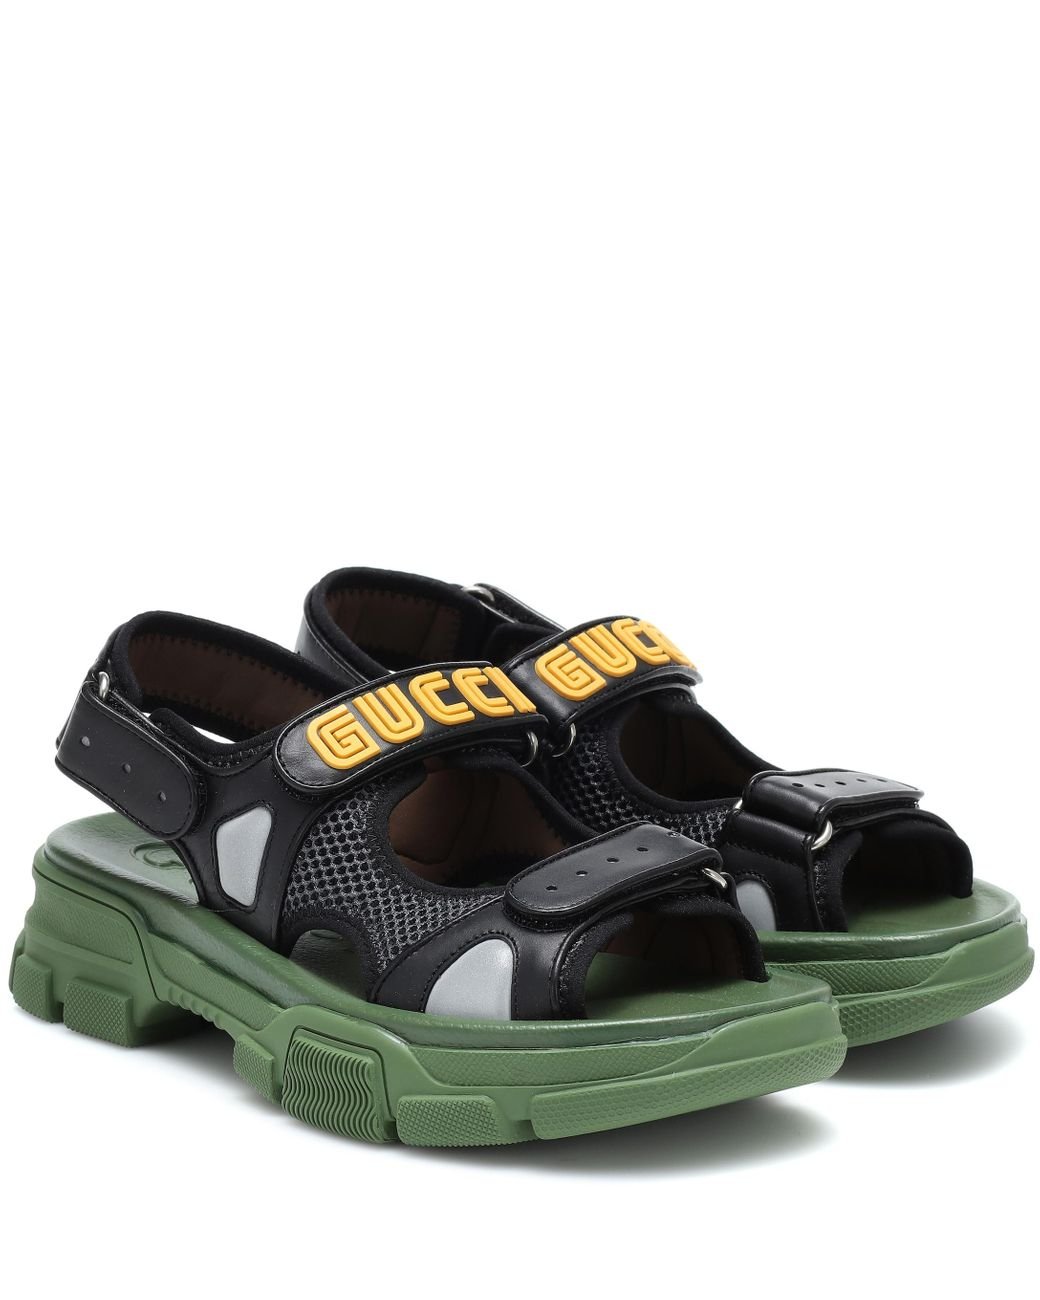 Gucci Black/Green Leather and Mesh Sega Sandals Size 44 Gucci